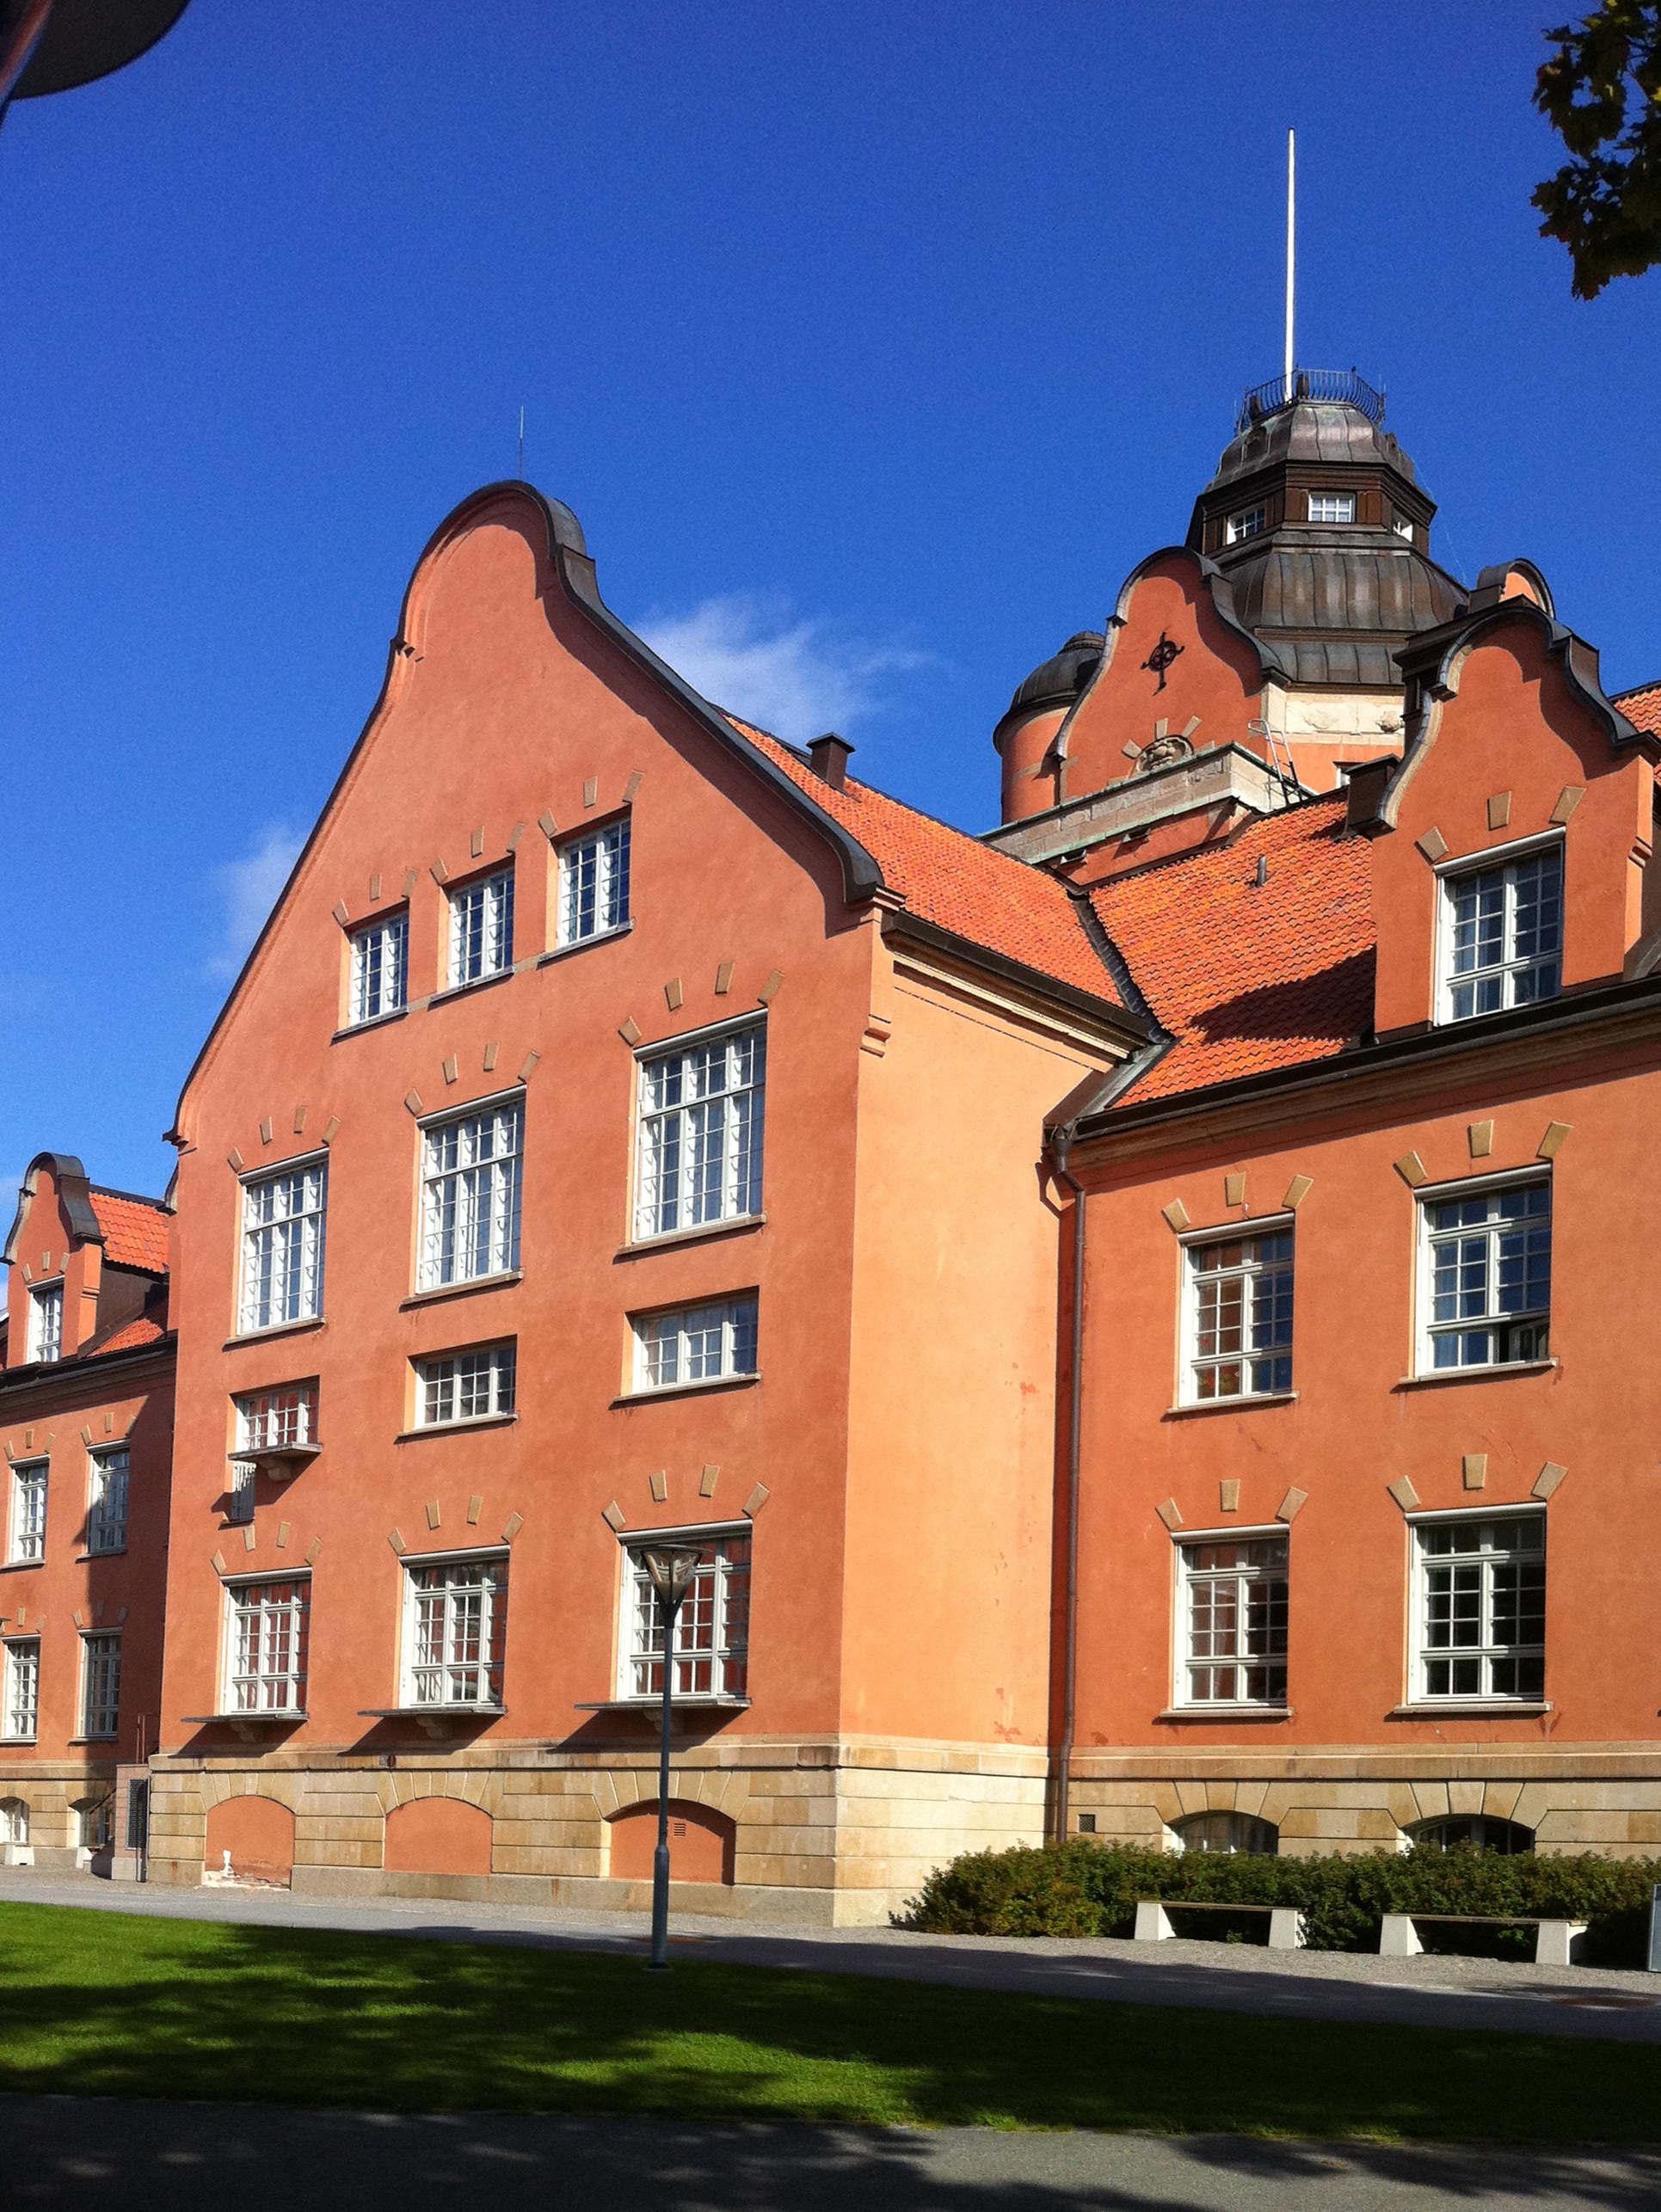  Uppsala